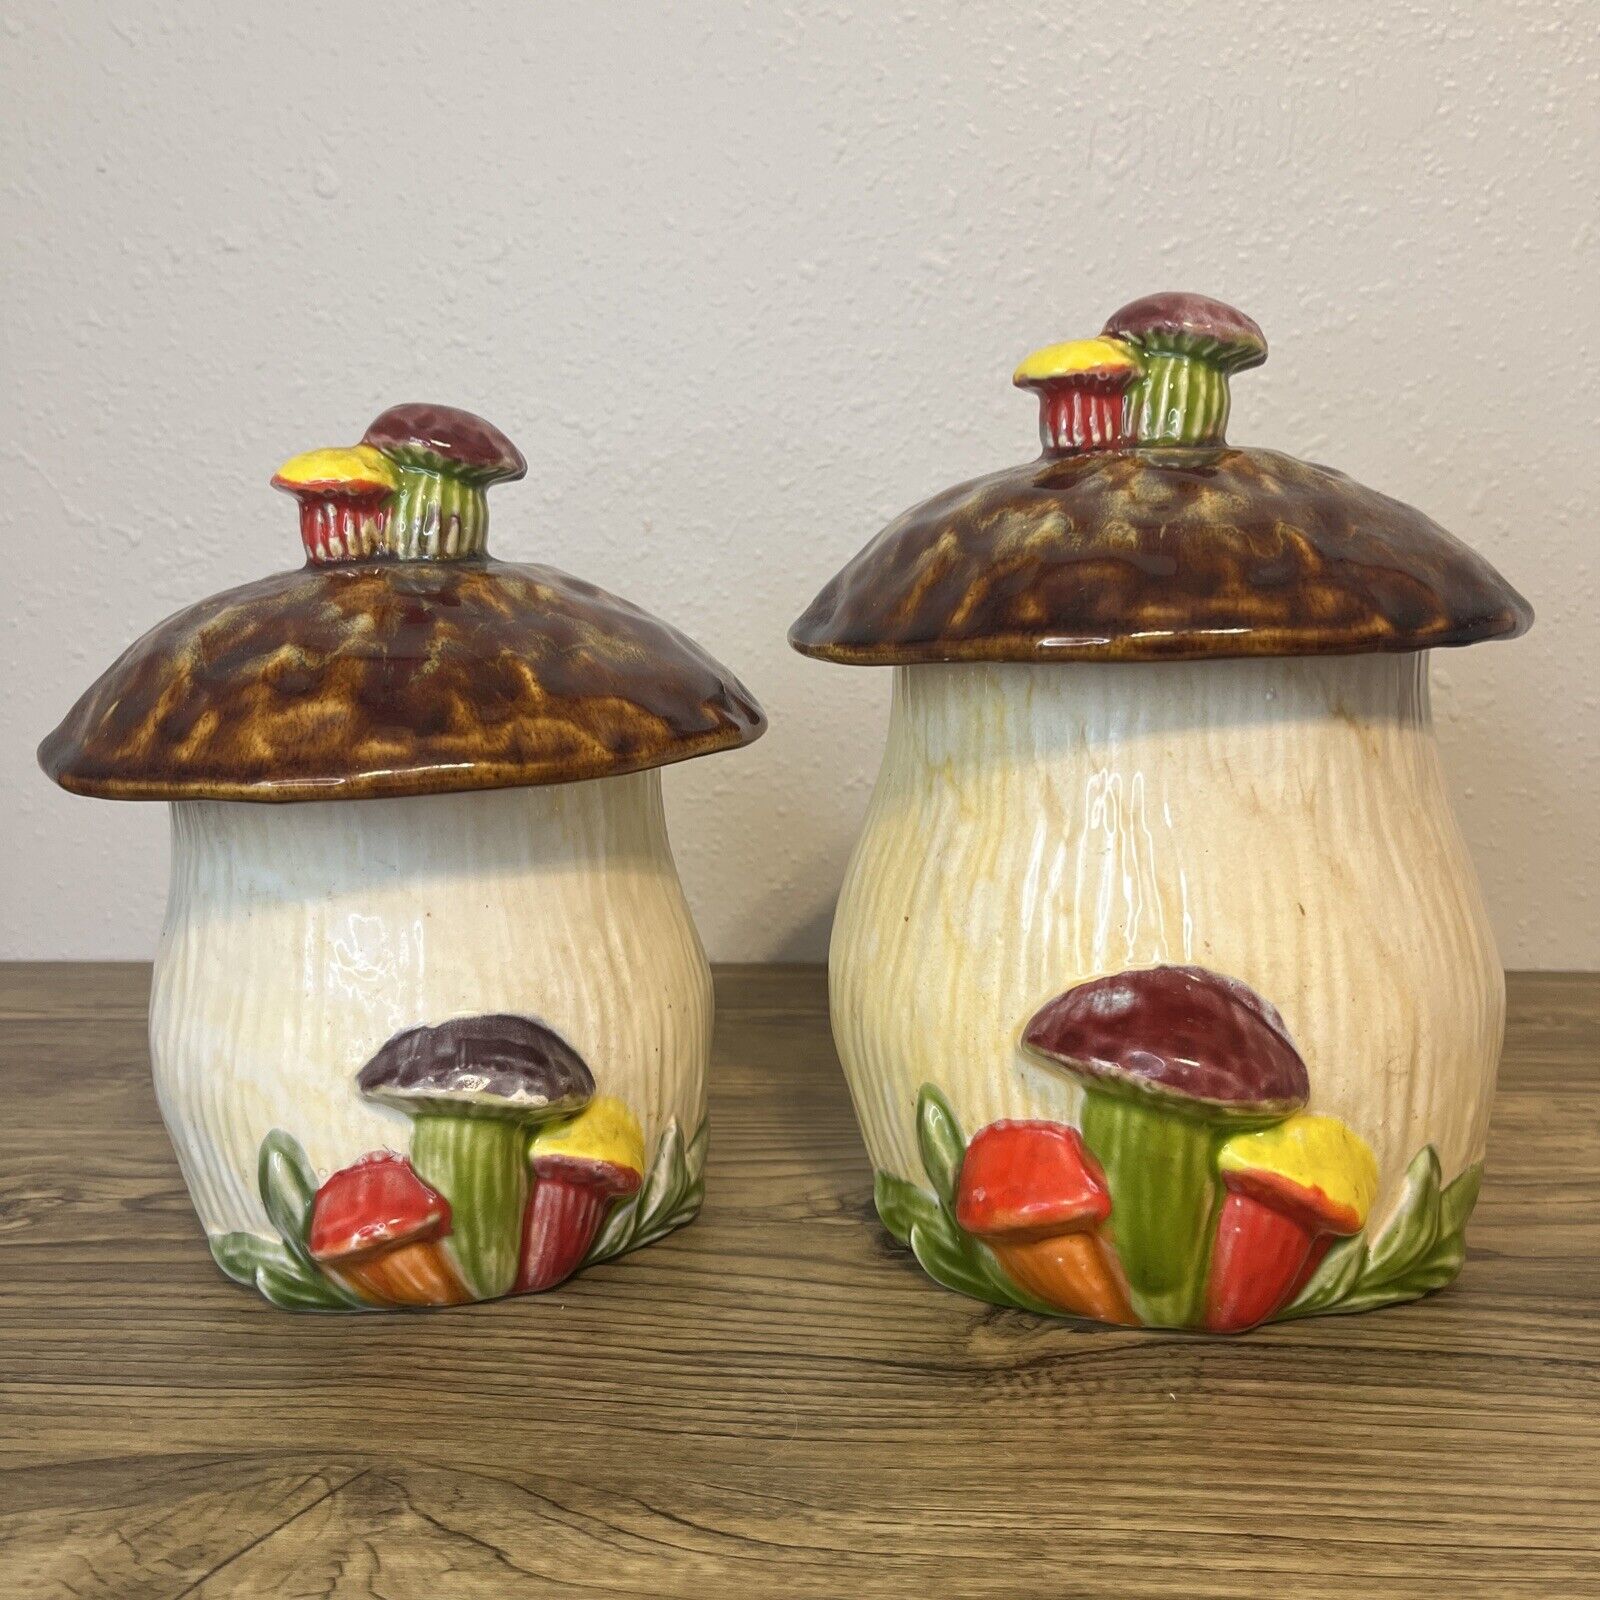 VTG 70s Mushroom Ceramic Canister Cookie Jars JAPAN